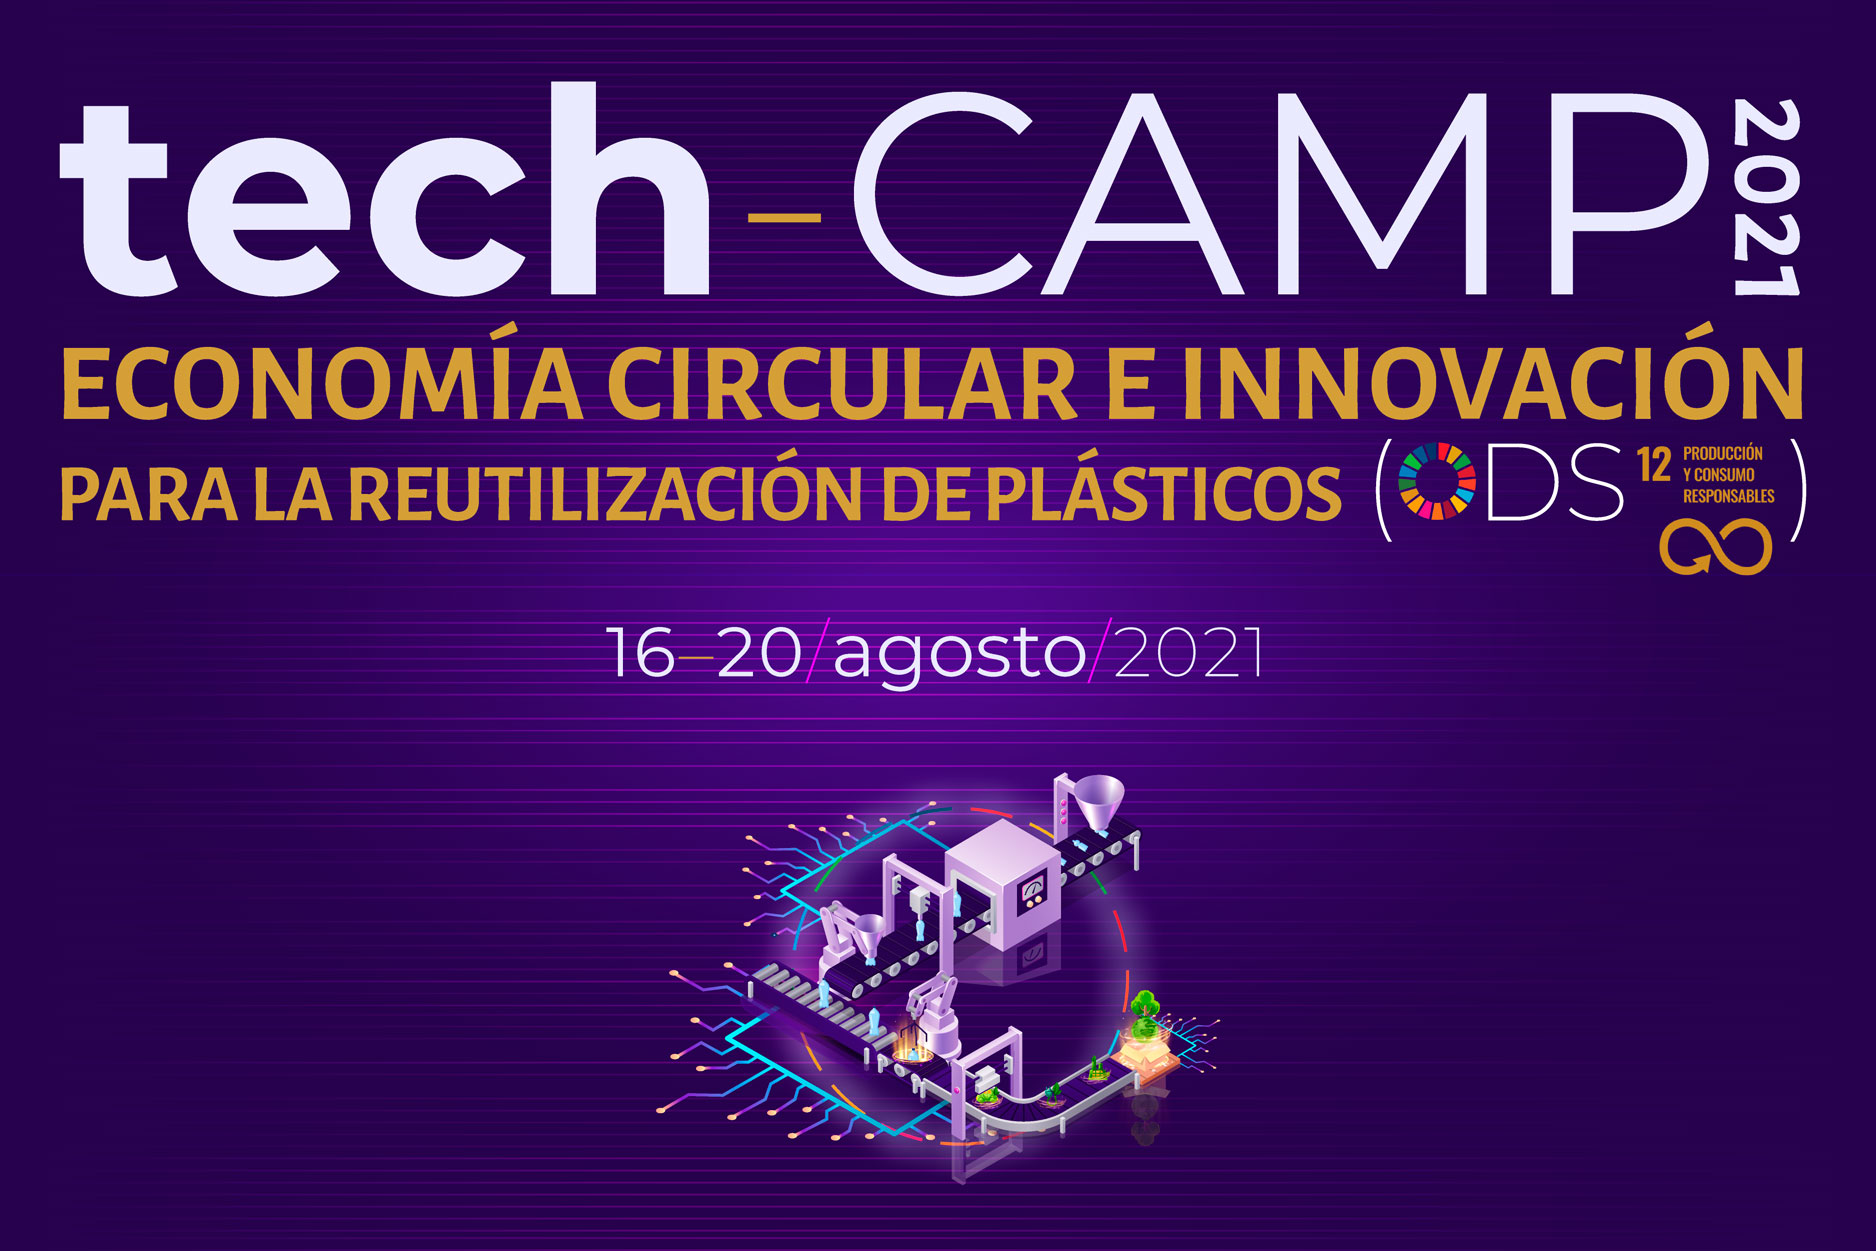 Tech-CAMP 2021